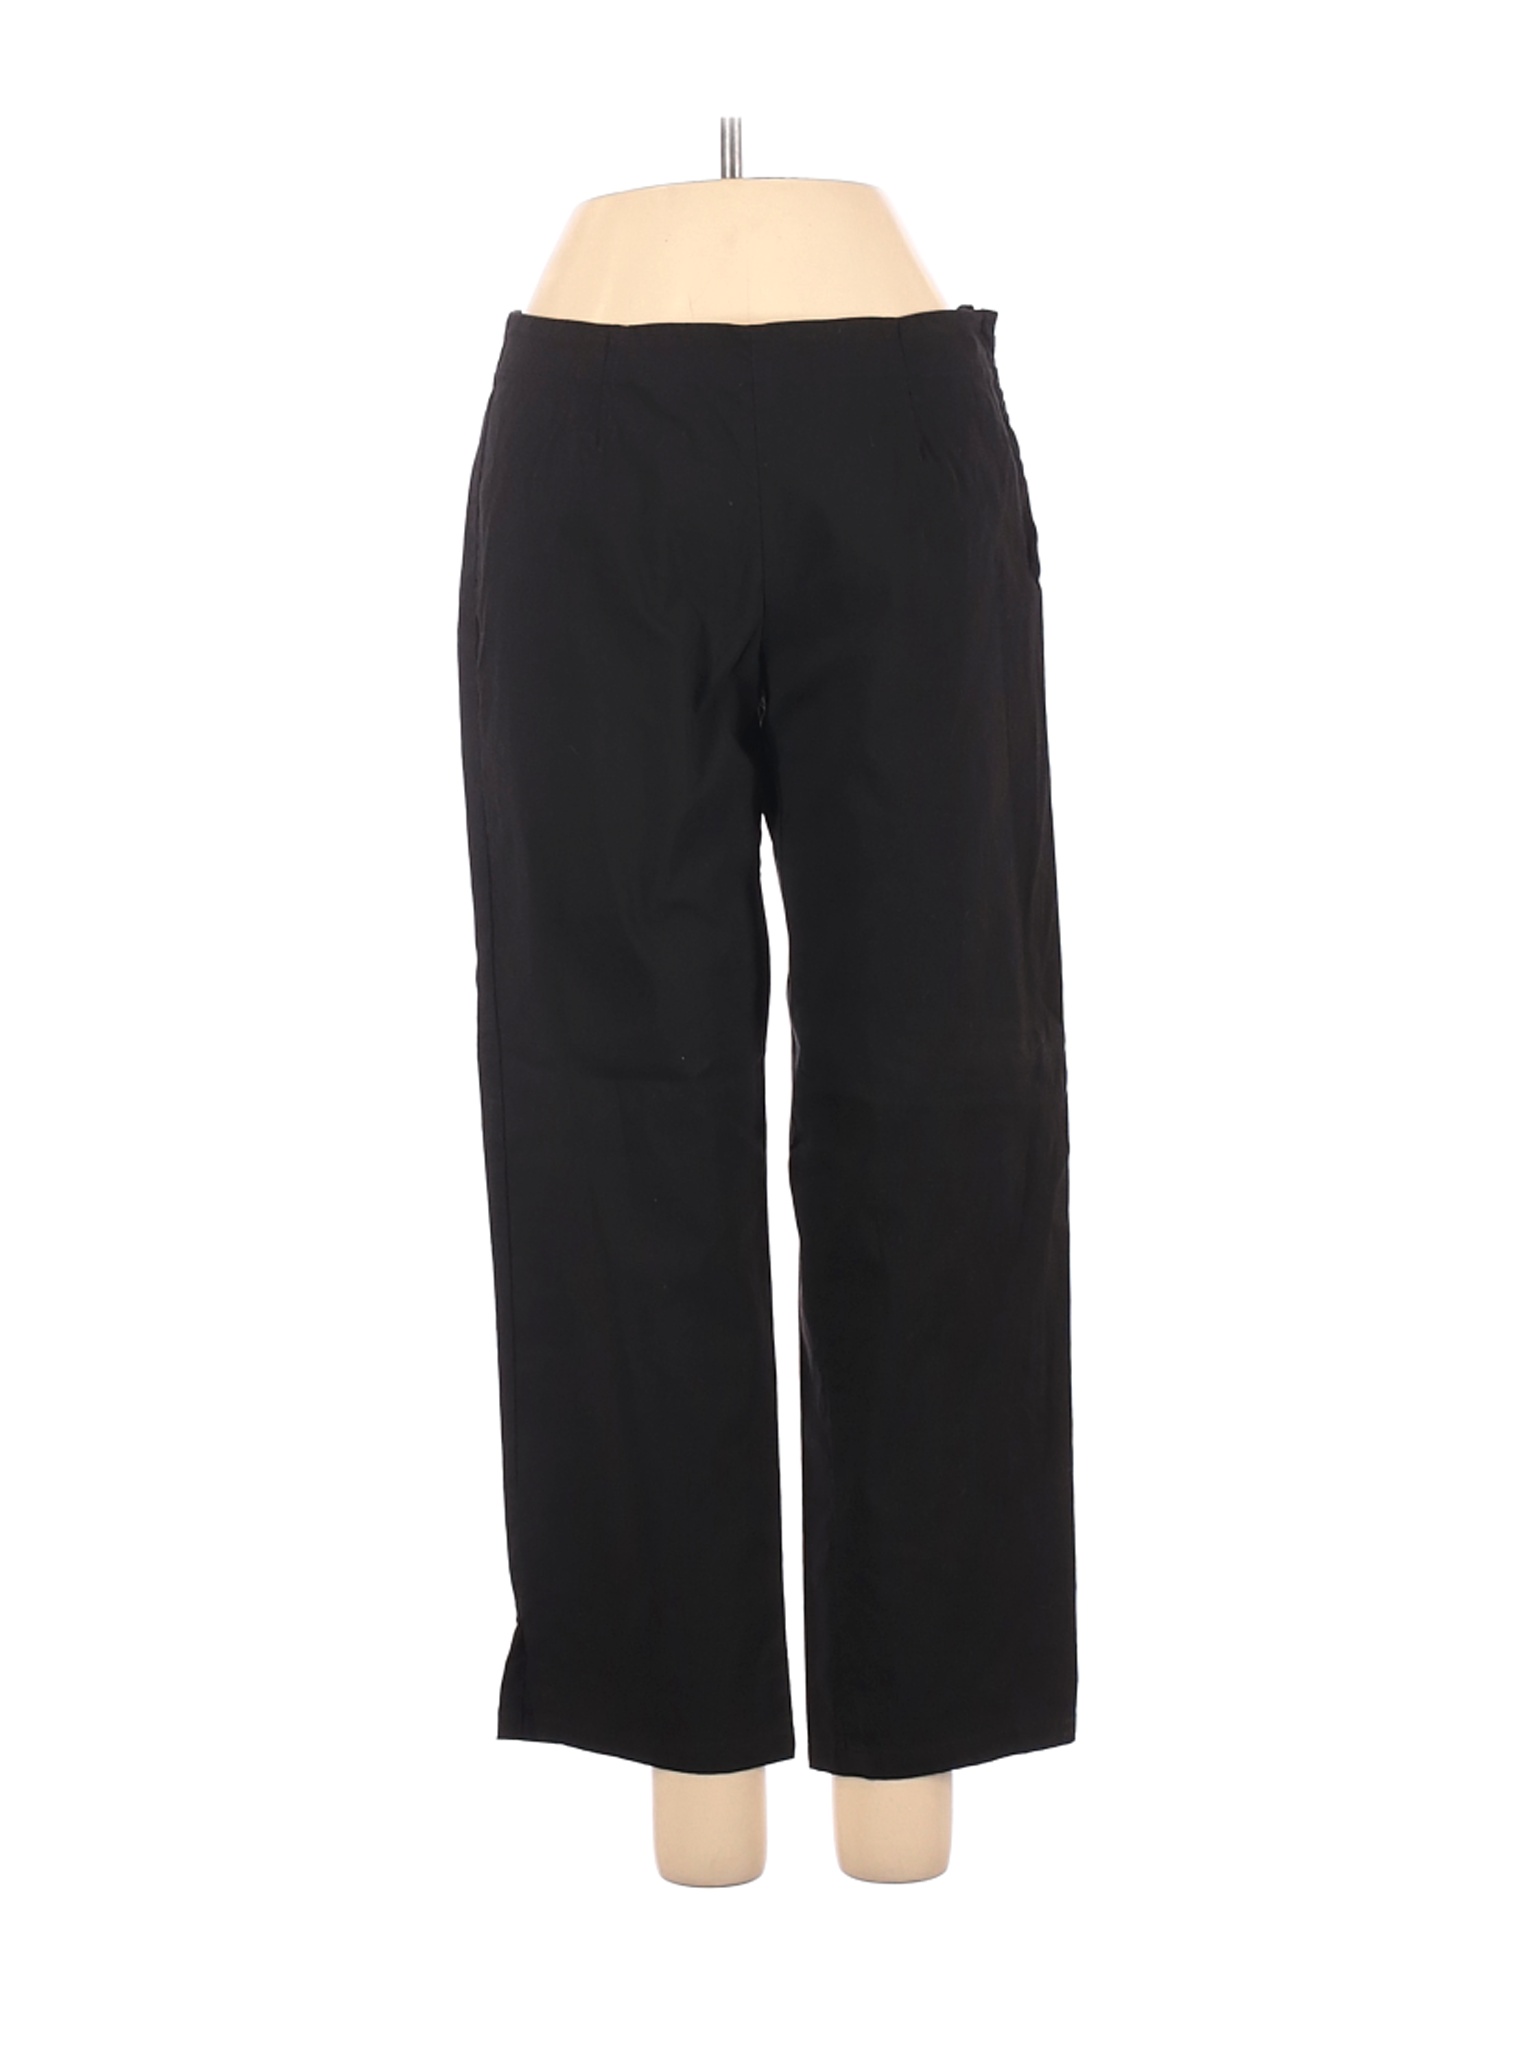 Max Studio Women Black Casual Pants XS | eBay